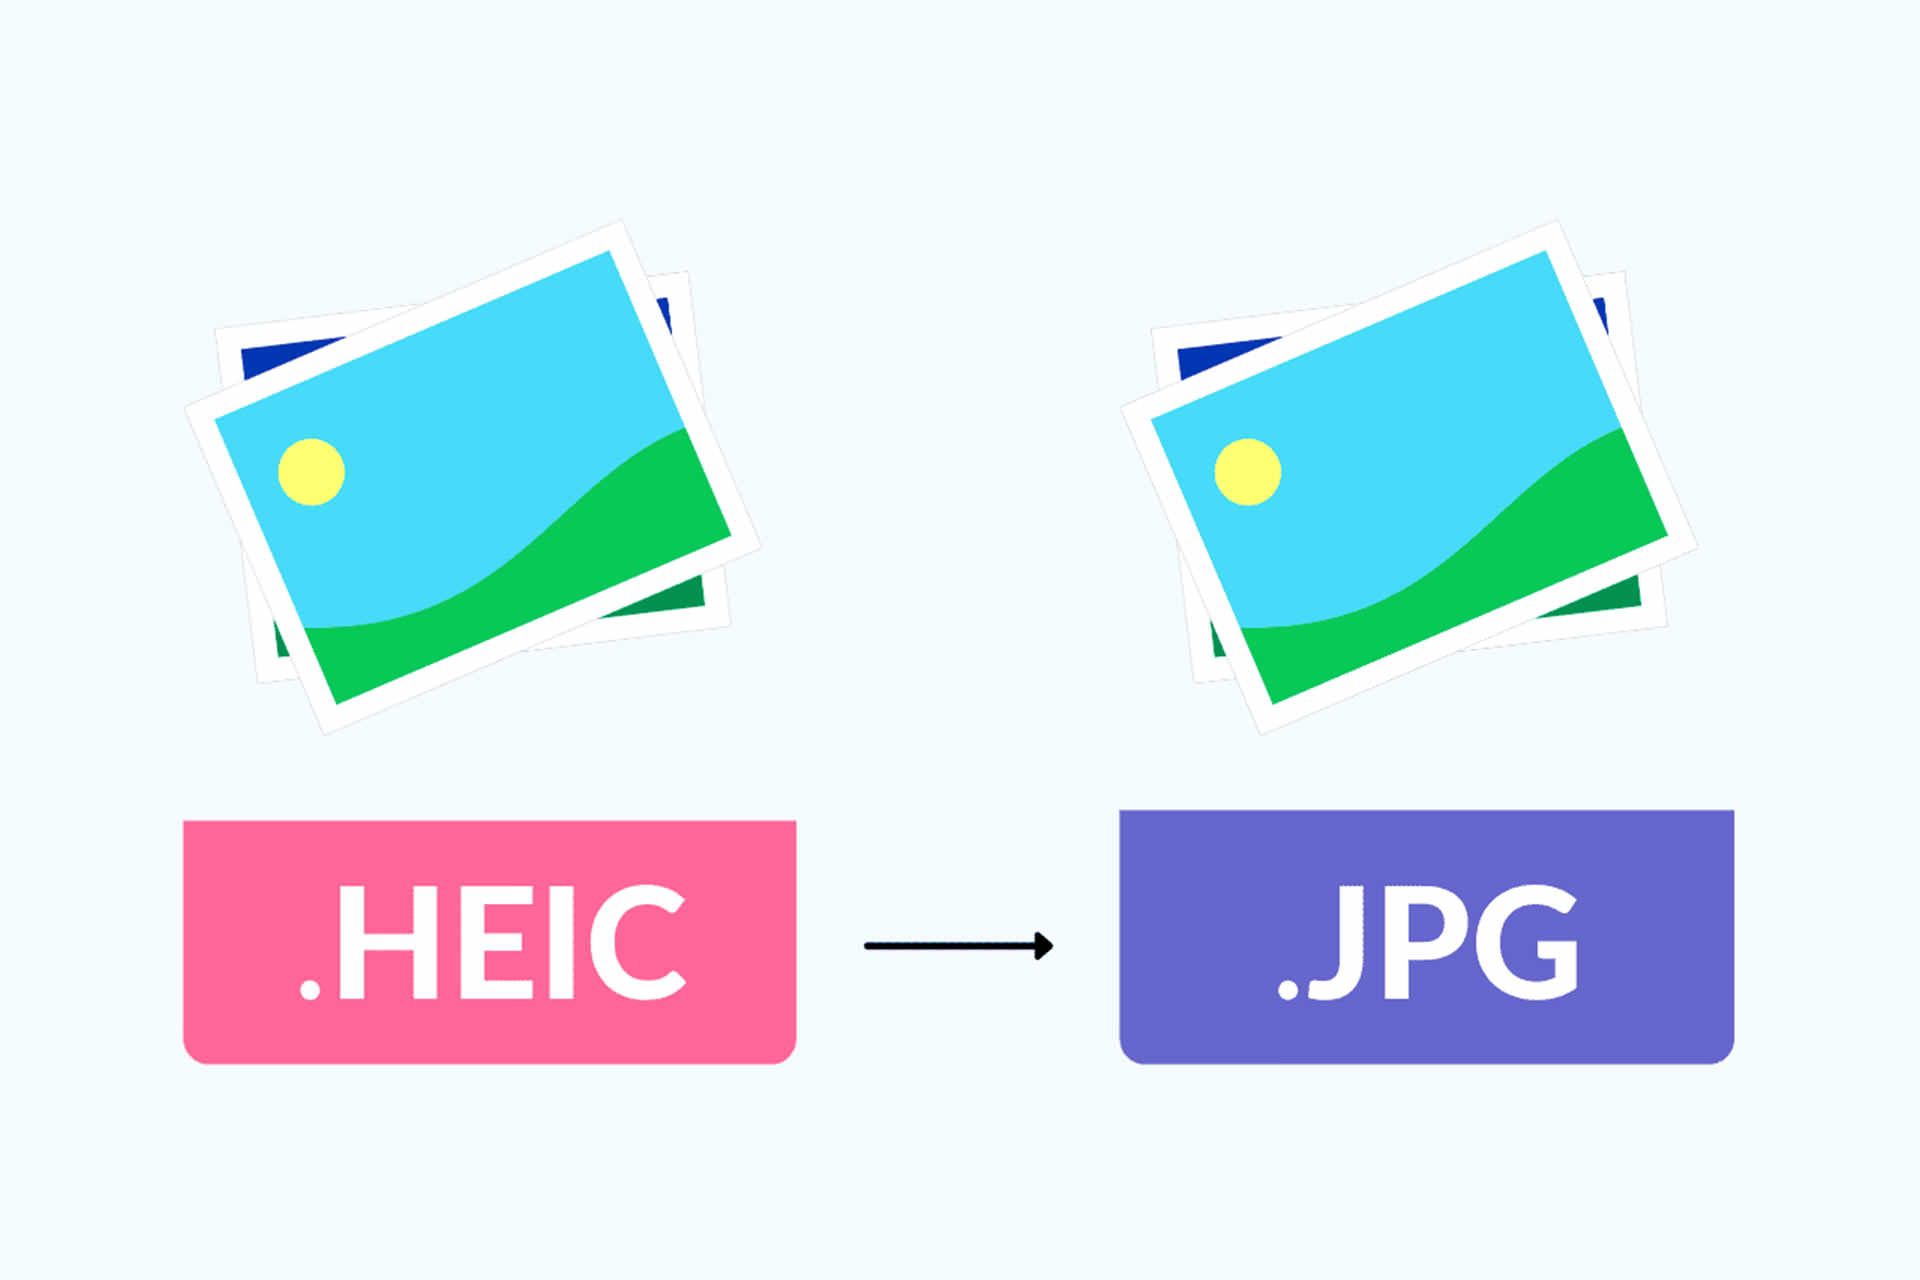 تبدیل HEIC به JPG